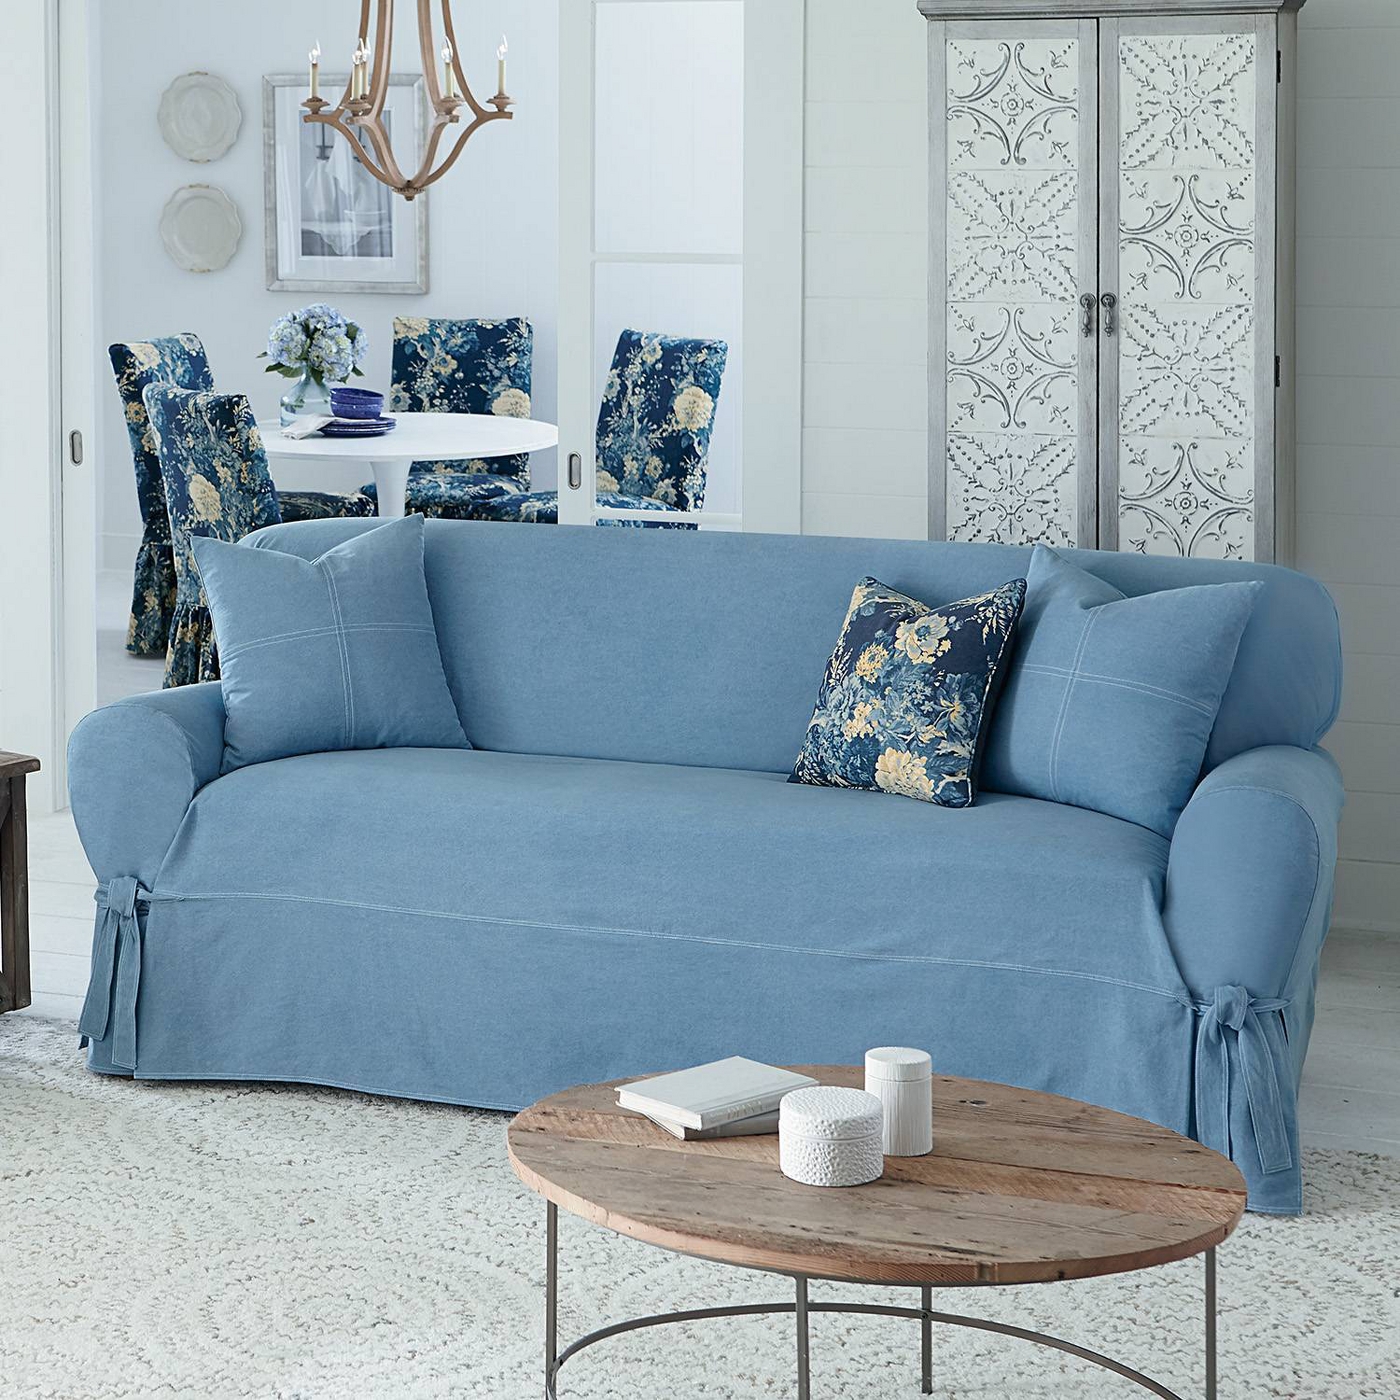 New 7 Styles Floral Elastic Sofa Cover Throw Sofa Protector Slipcover Home Decor 